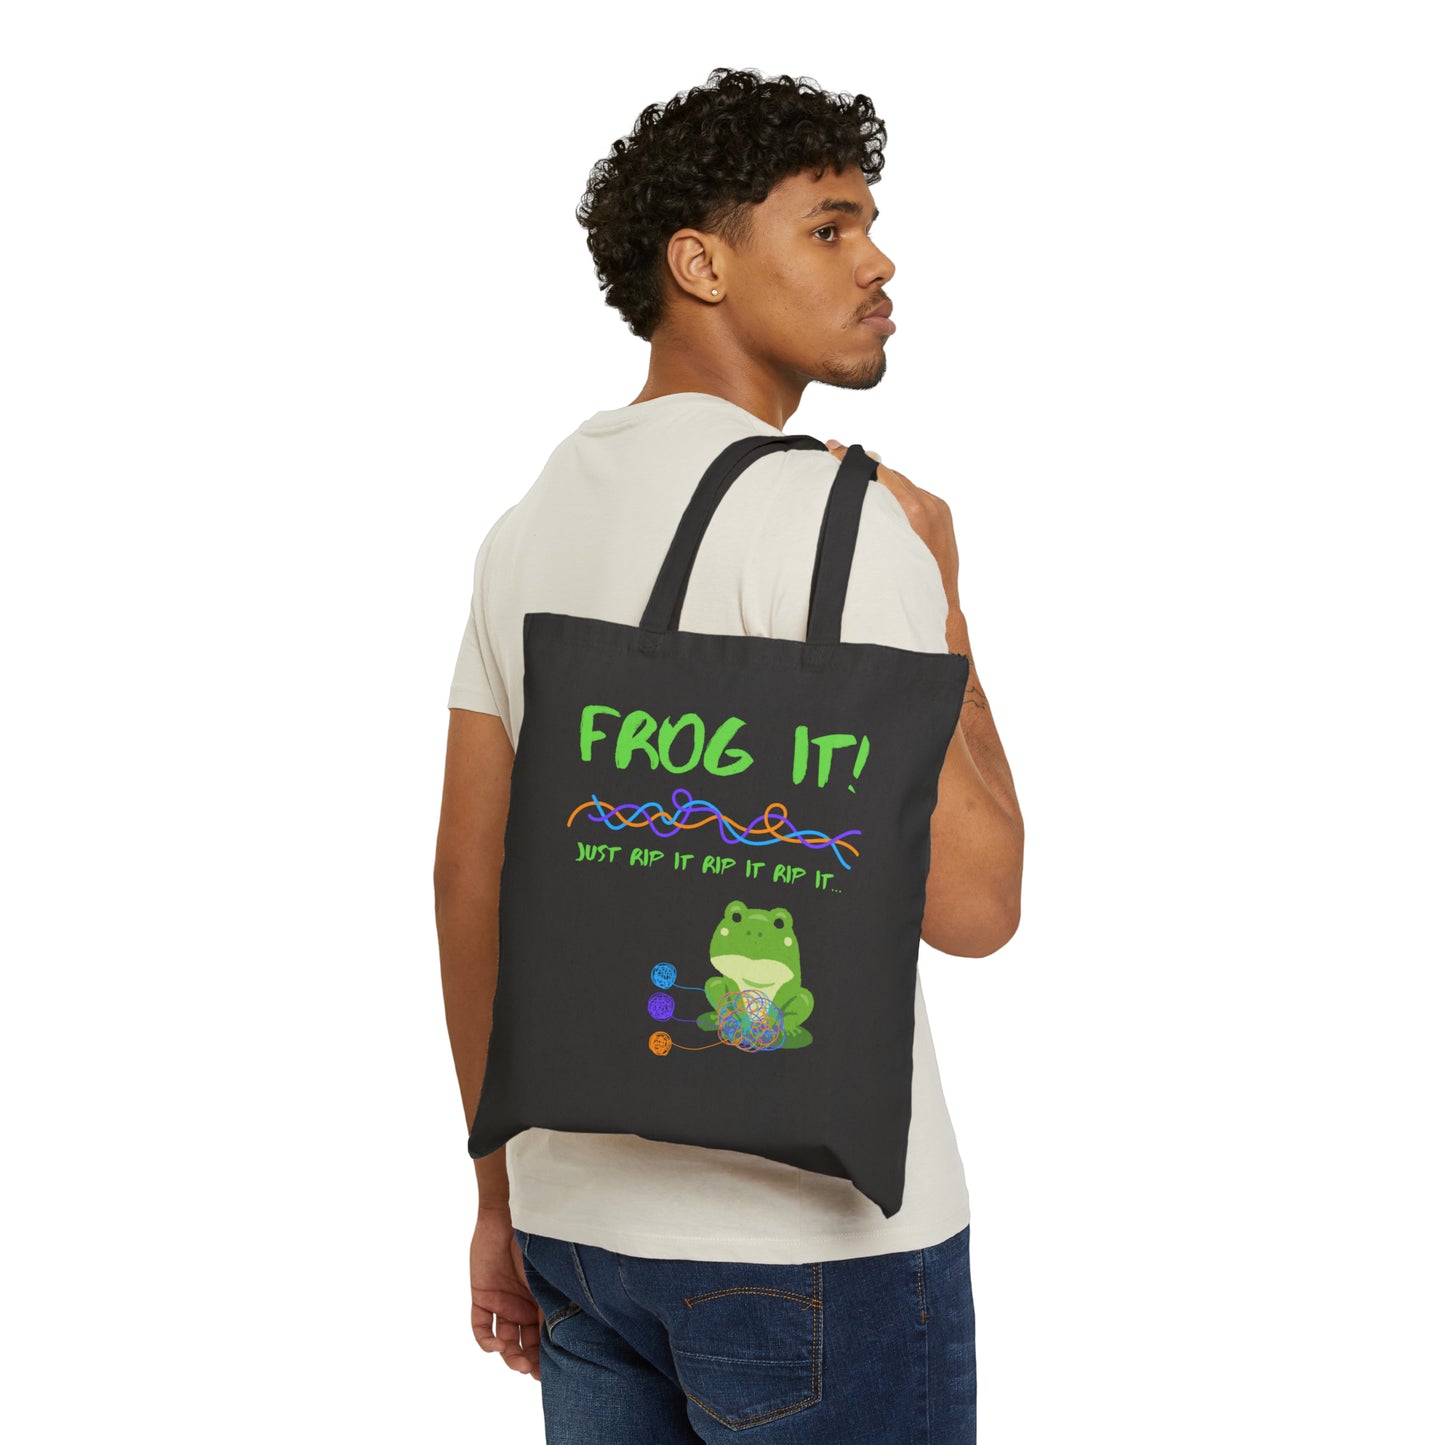 Frog It Cotton Canvas Tote Bag